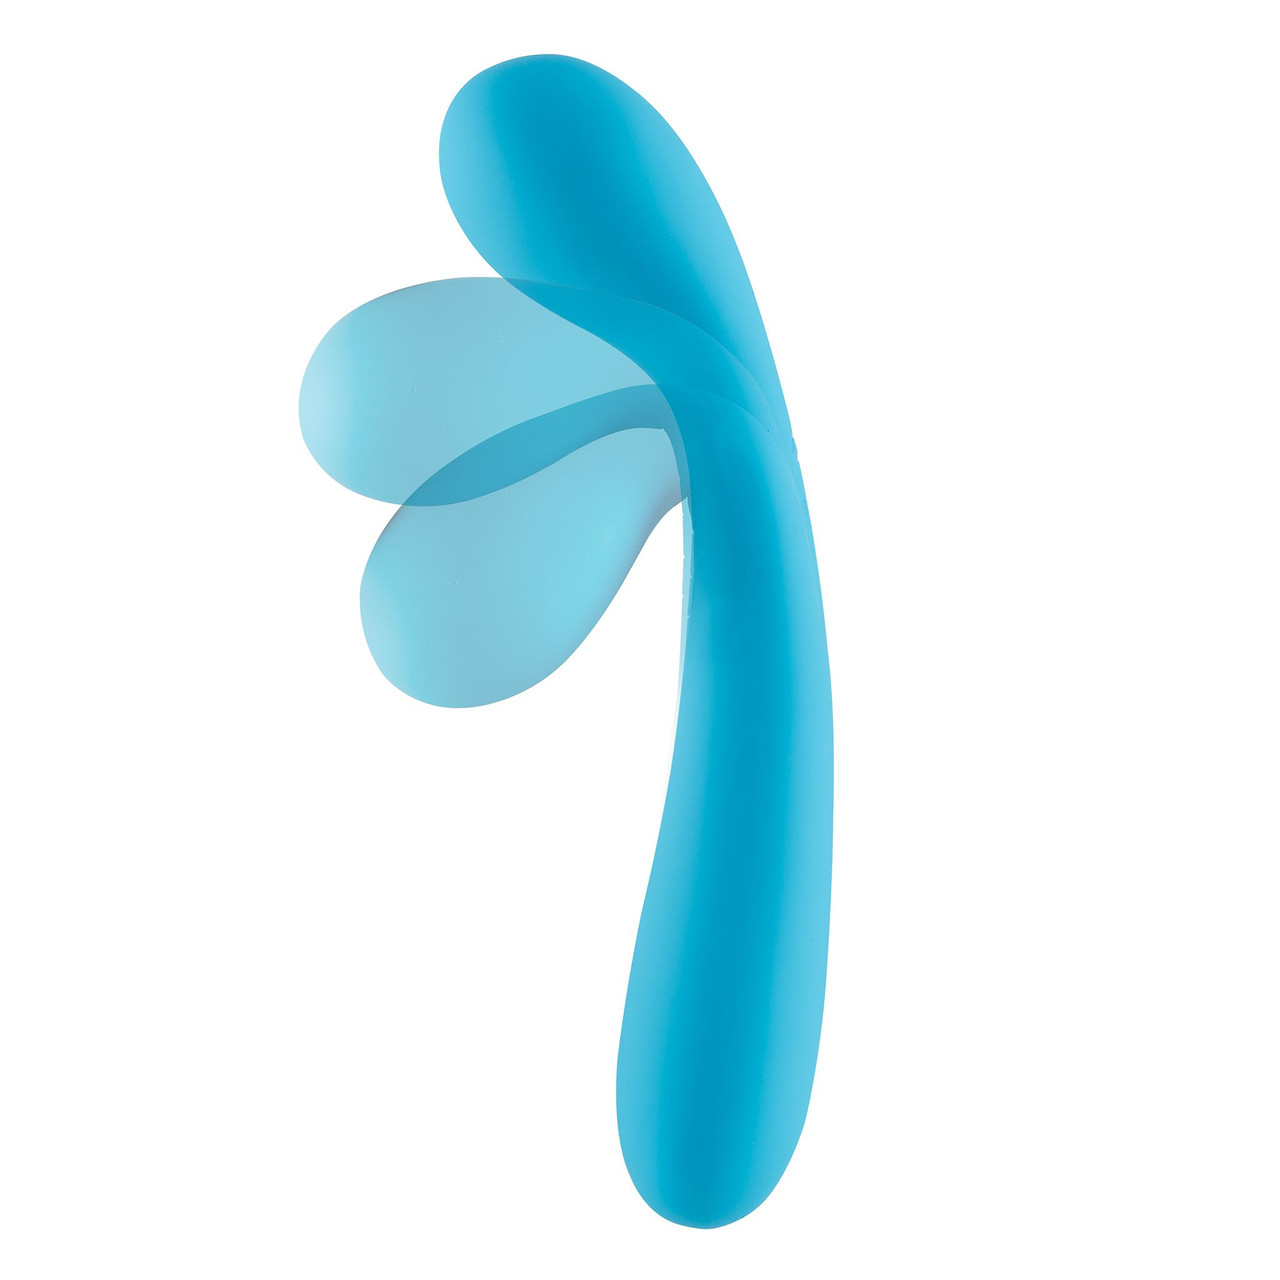 Rechargeable G-spot Slim | G Spot vibrators for women online from Condom Depot